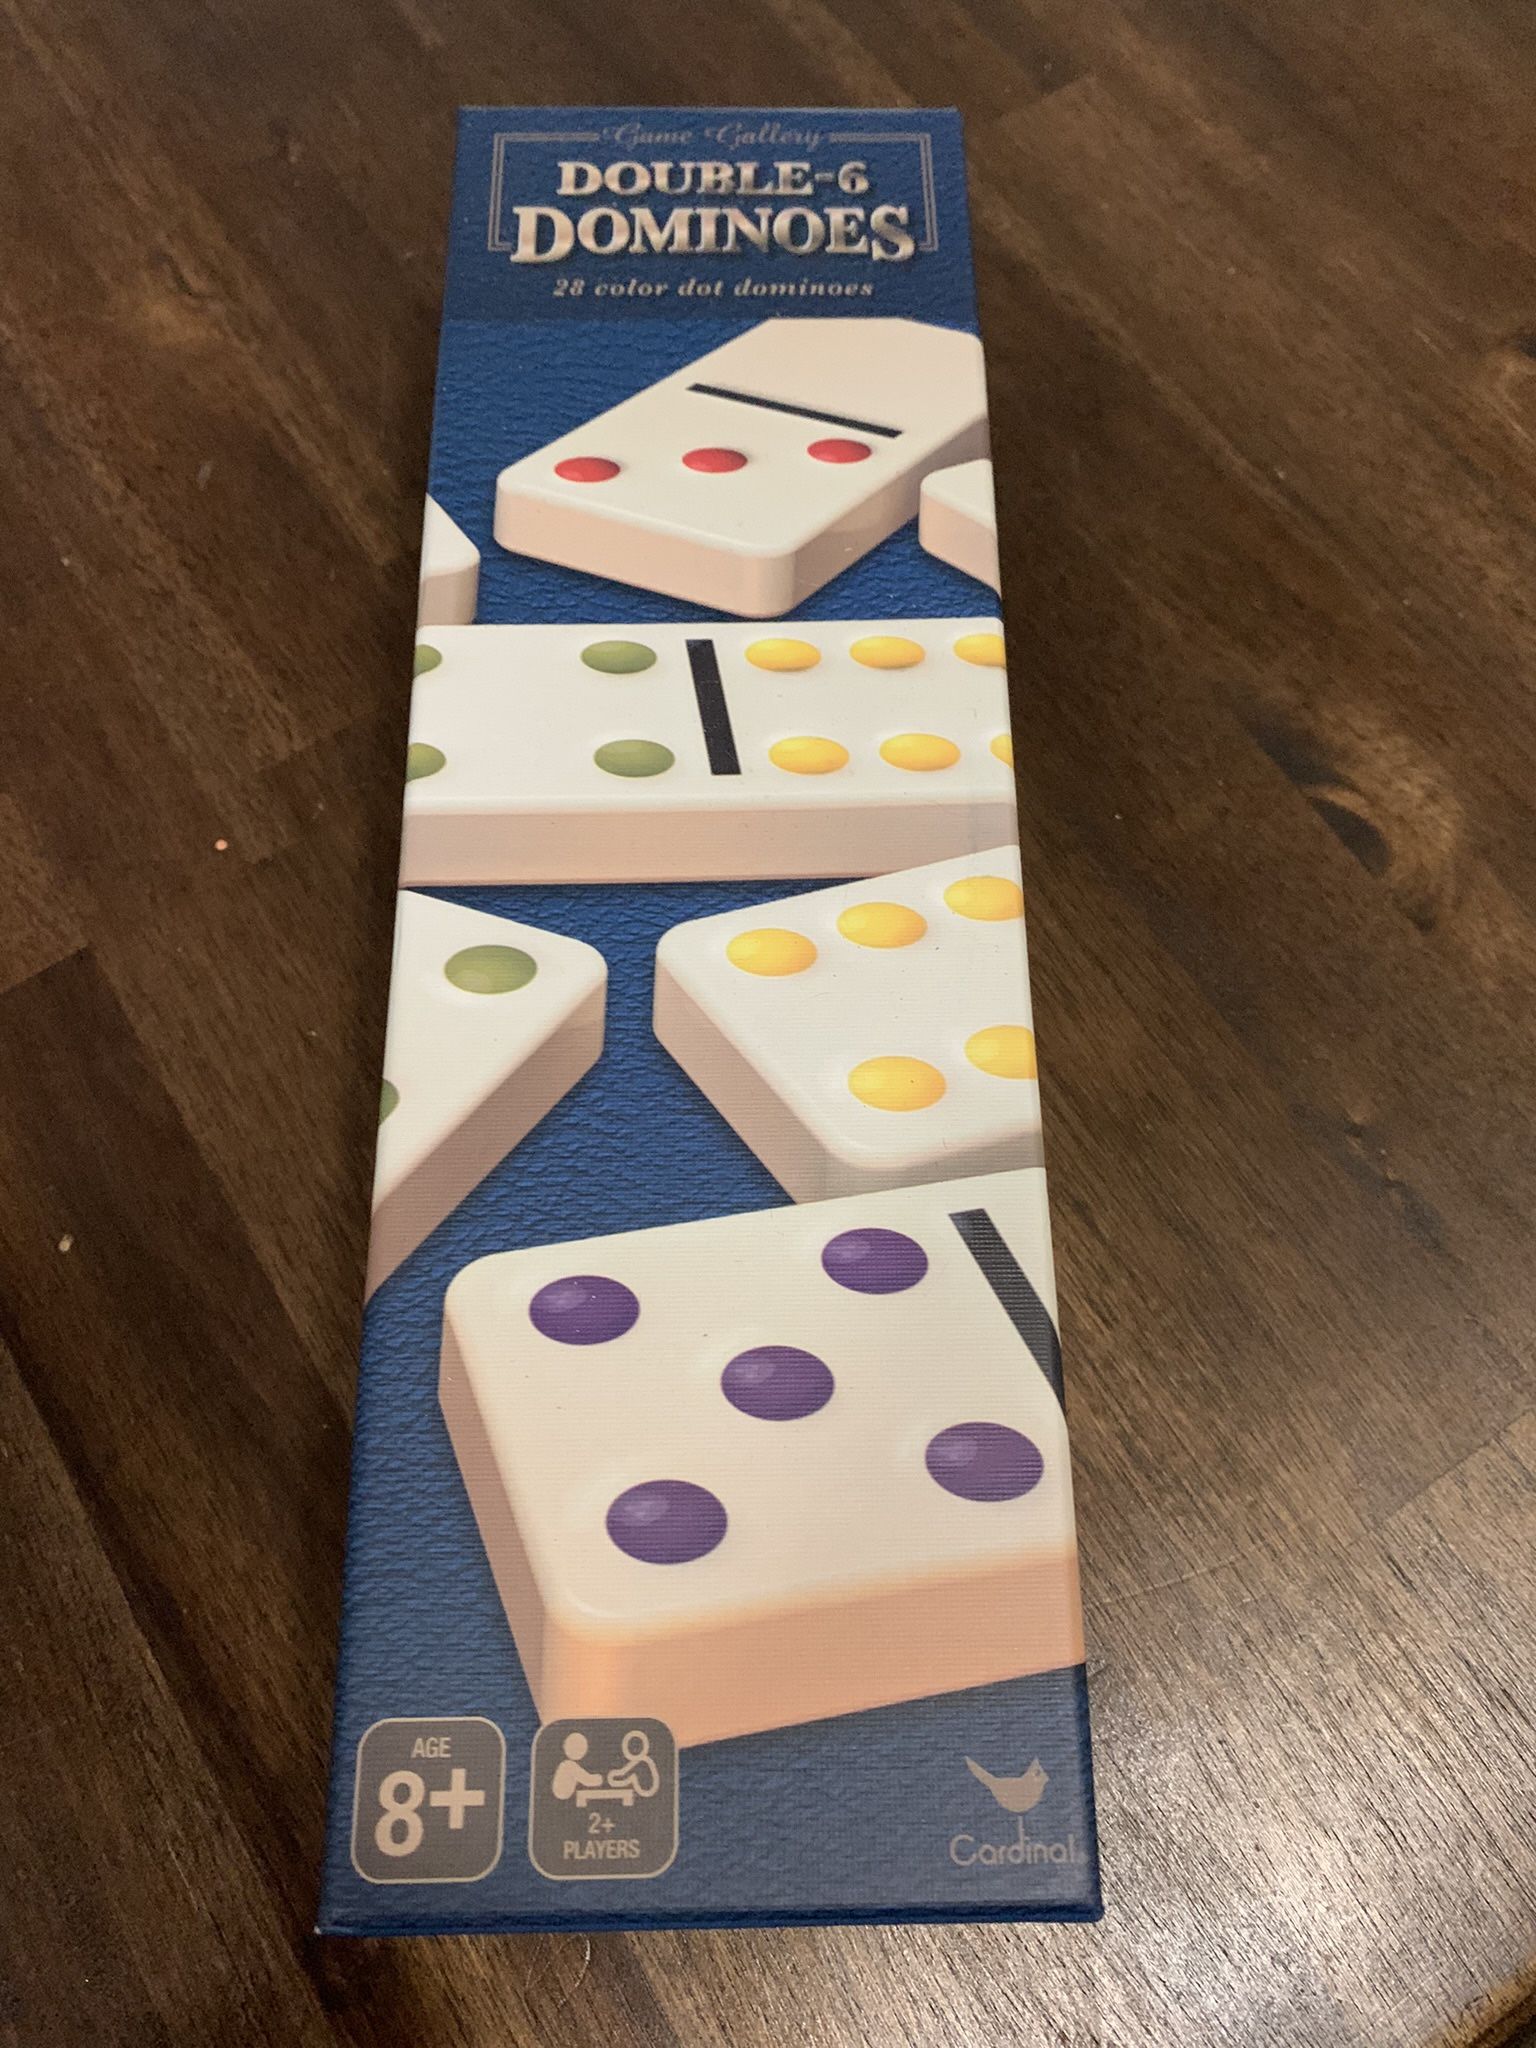 Double 6 dominoes